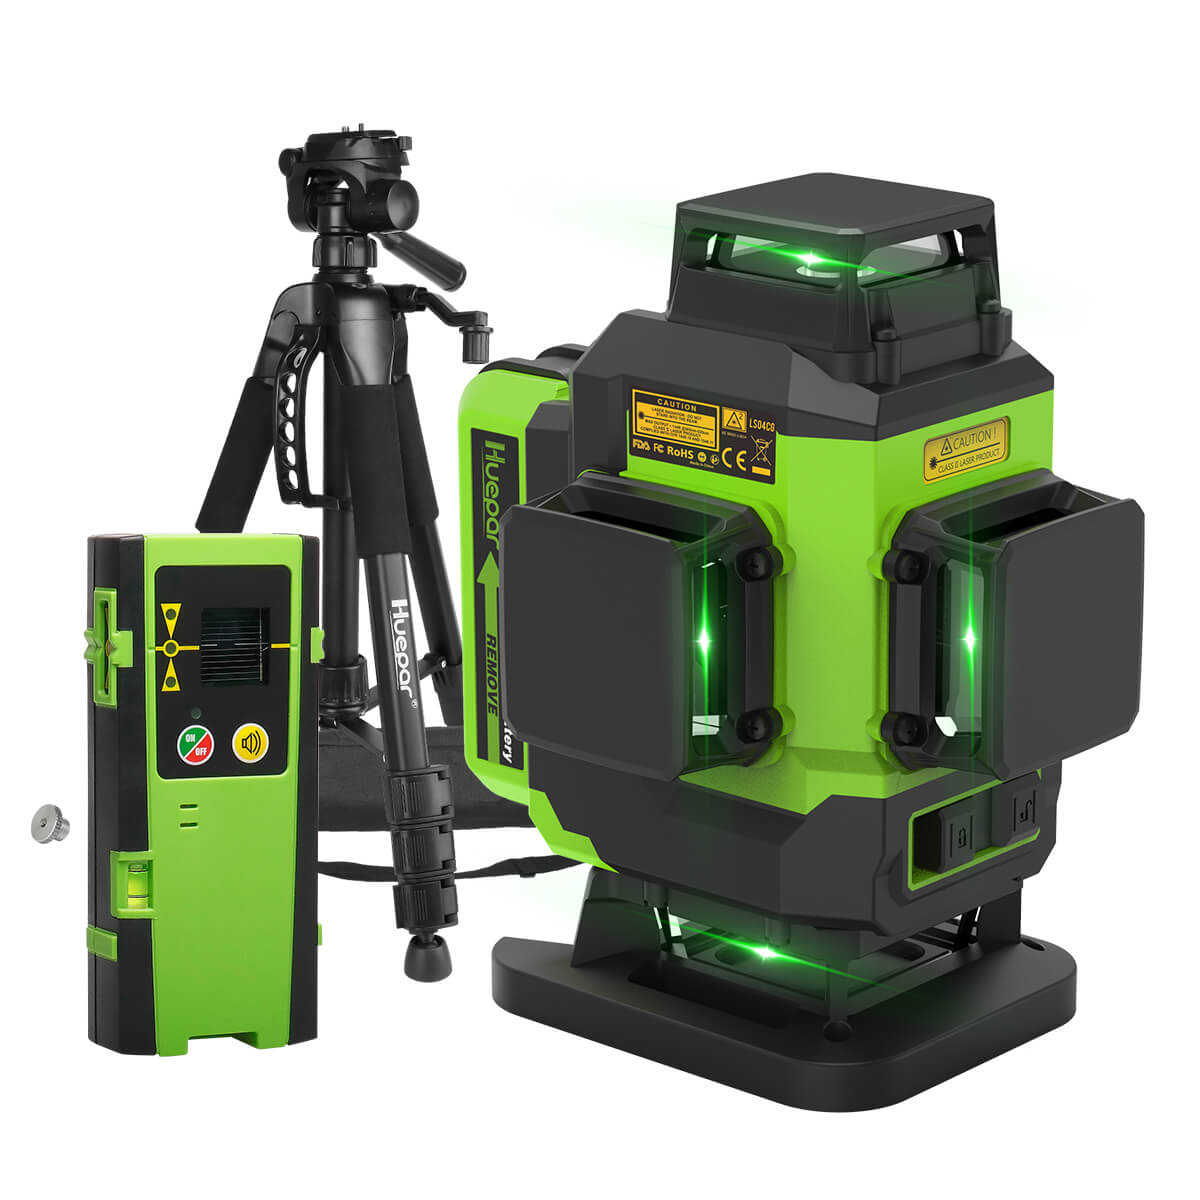 Huepar LS04CG - Self-leveling 4x360 Green Cross Line Floor Laser Tool with Remote Control